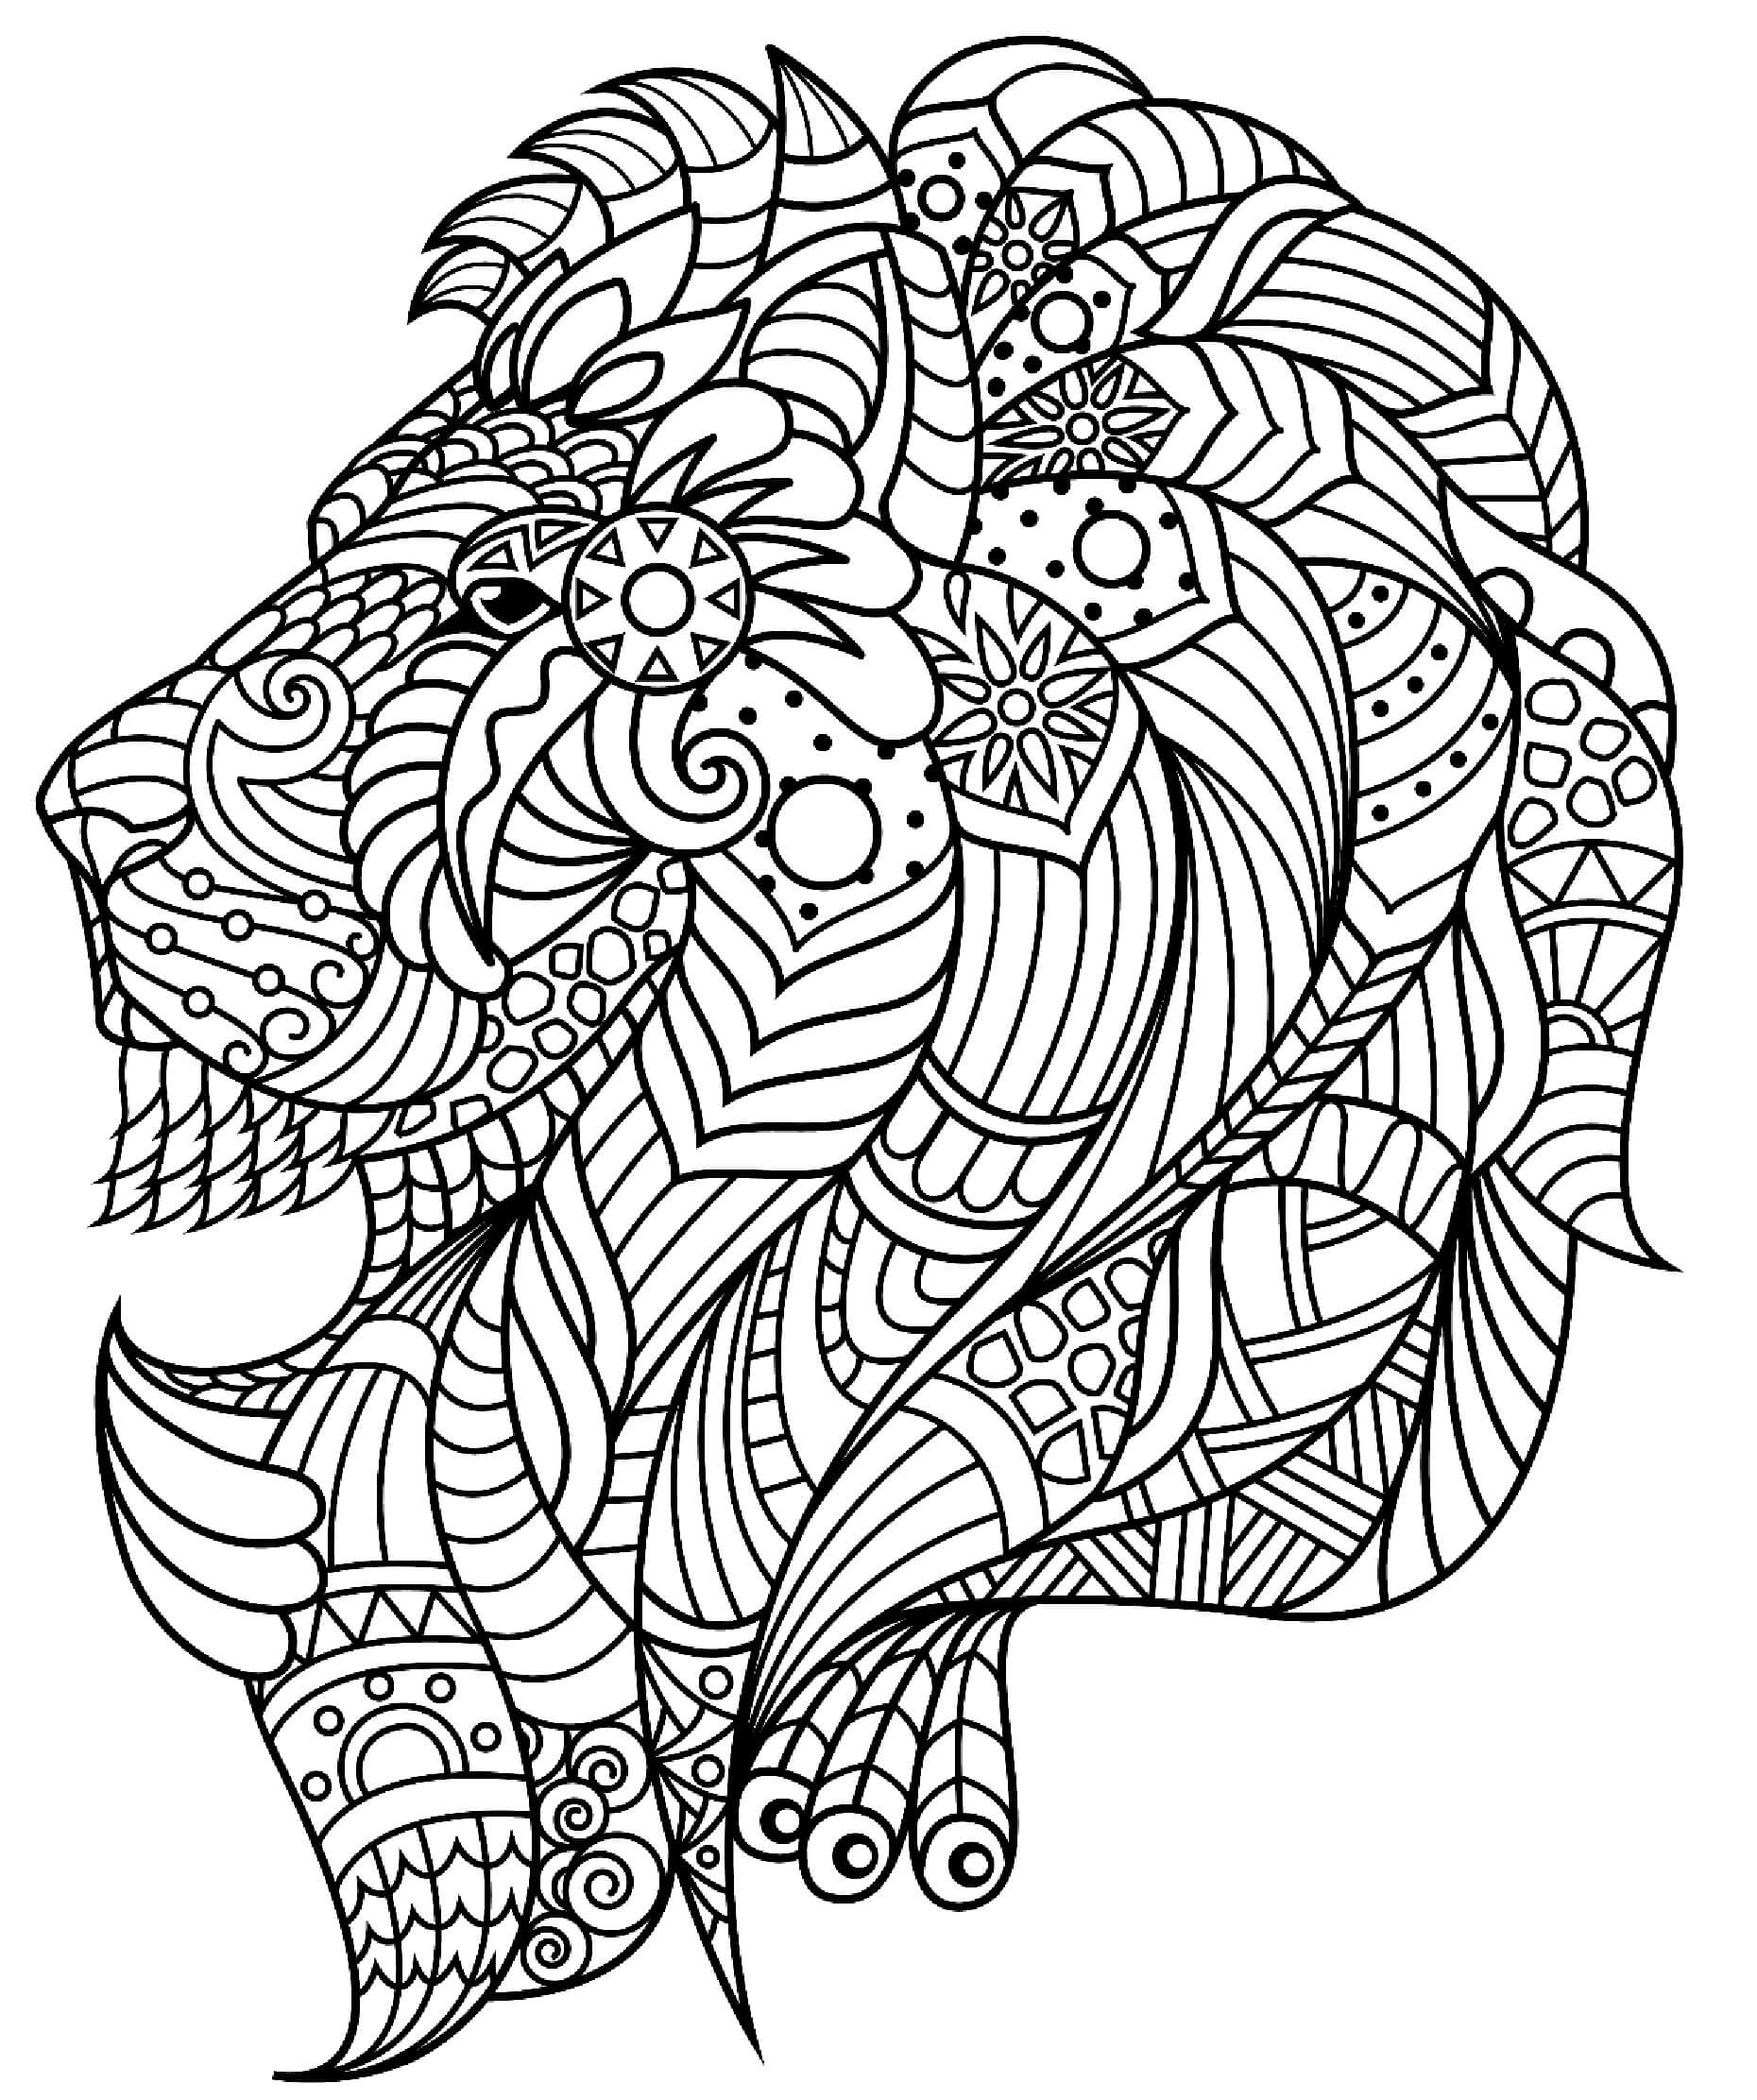 Mandala Lion Coloring Page – Sheet 4 Mandalas